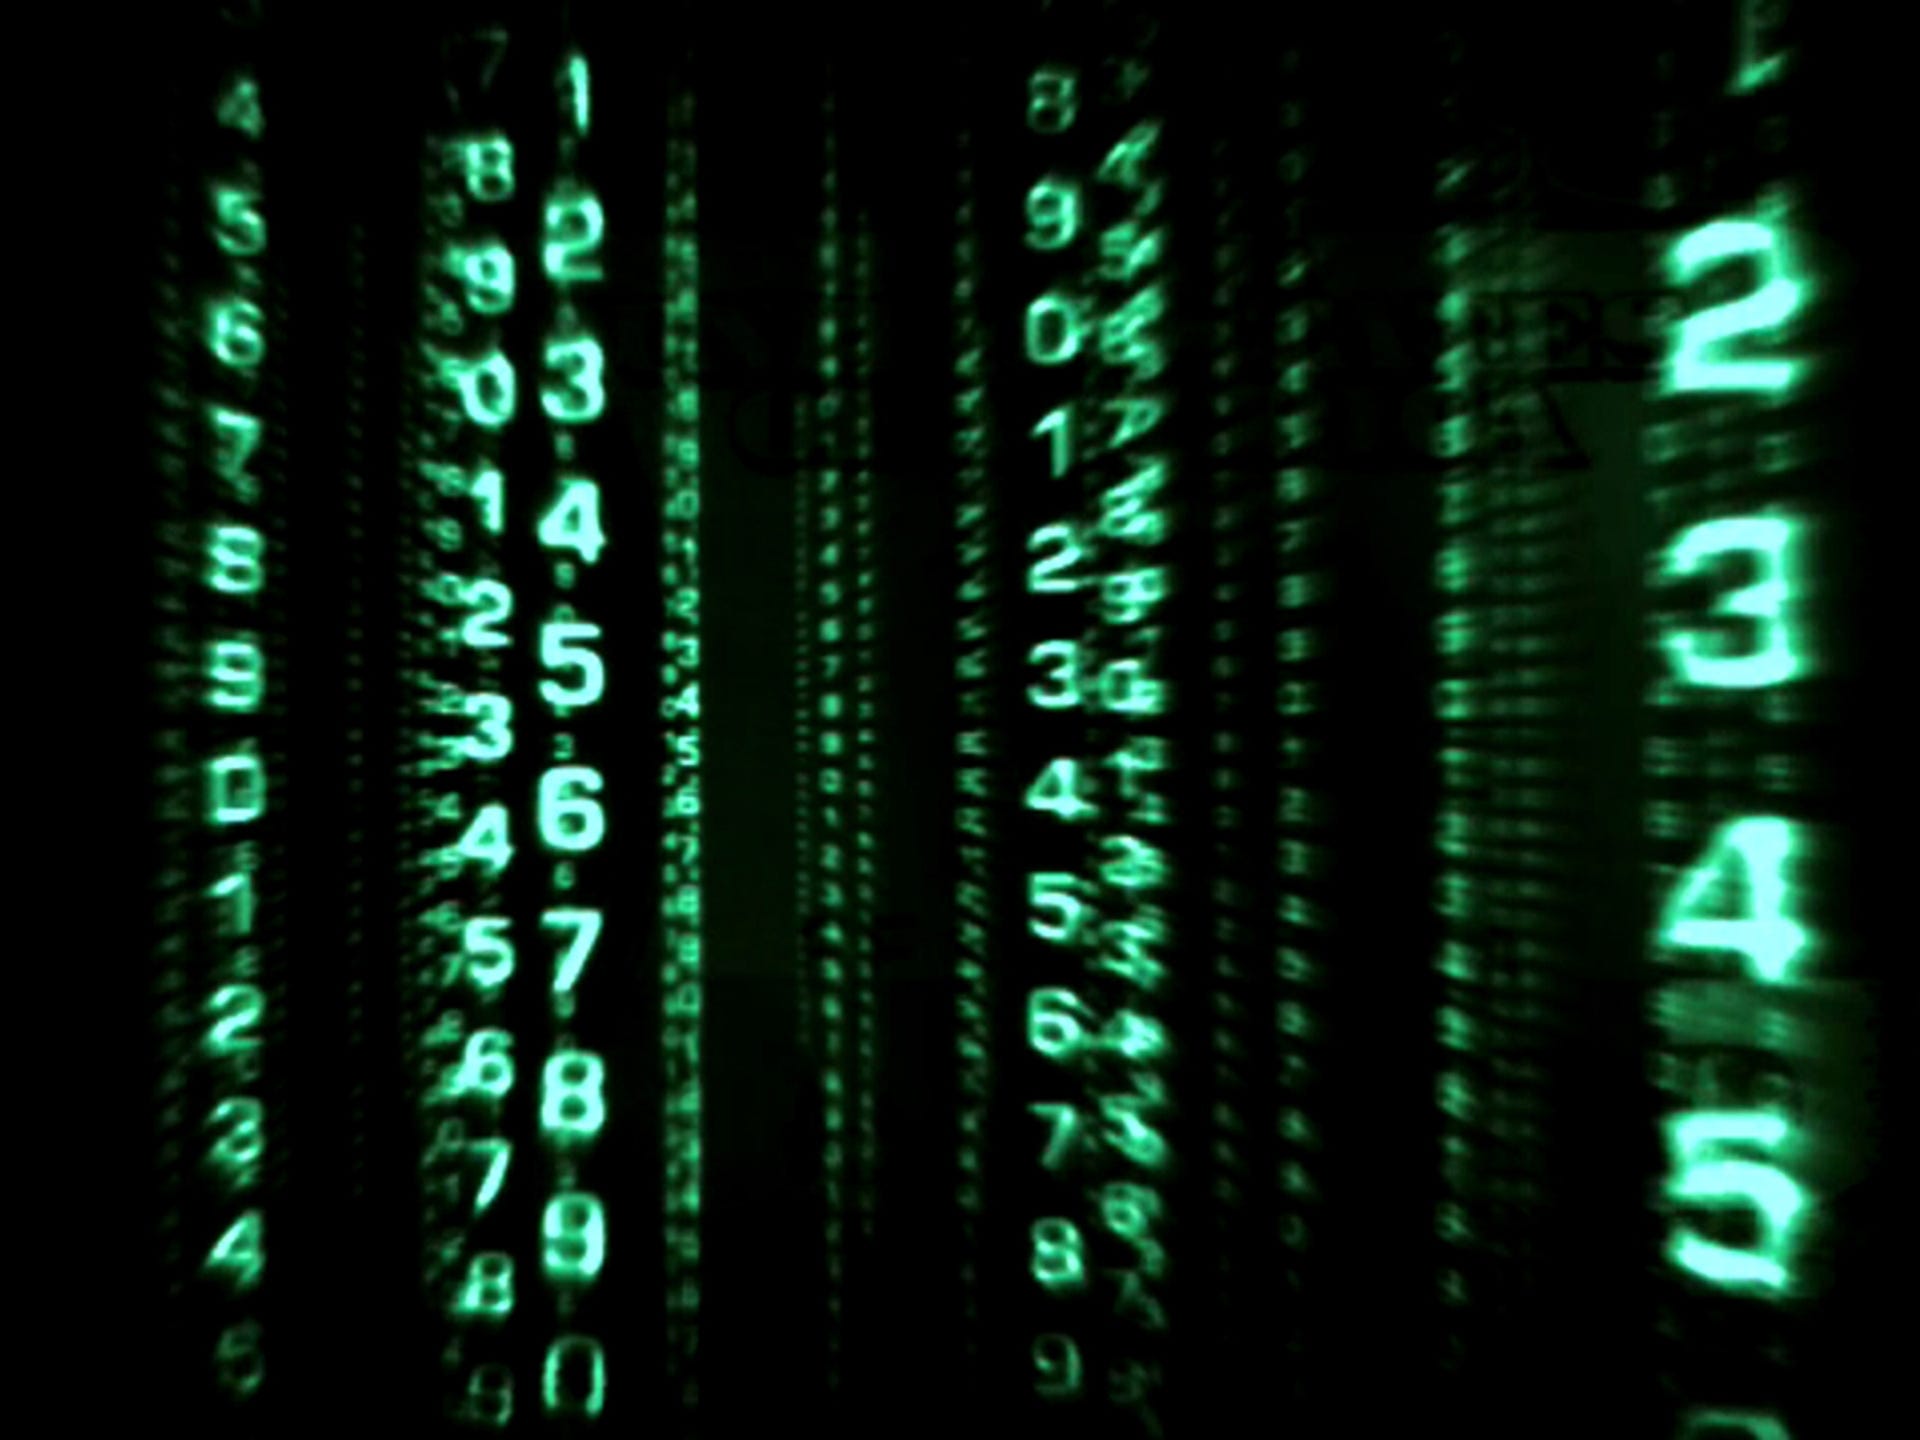 Stuxnet: Computer worm opens new era of warfare